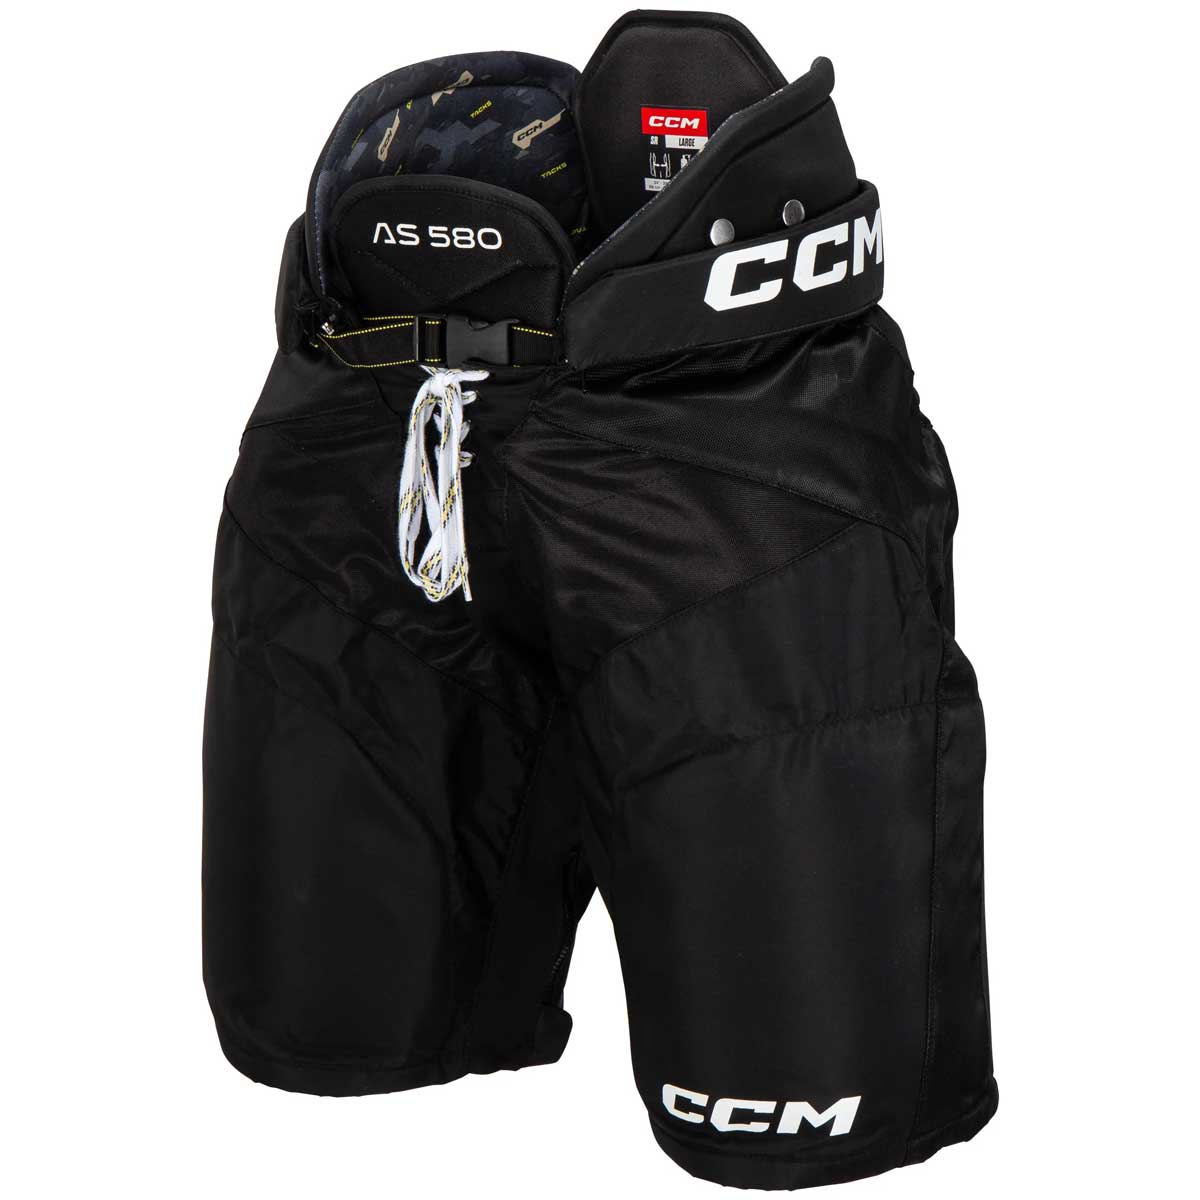 CCM S22 Tacks AS 580 Ice Hockey Pants - Senior